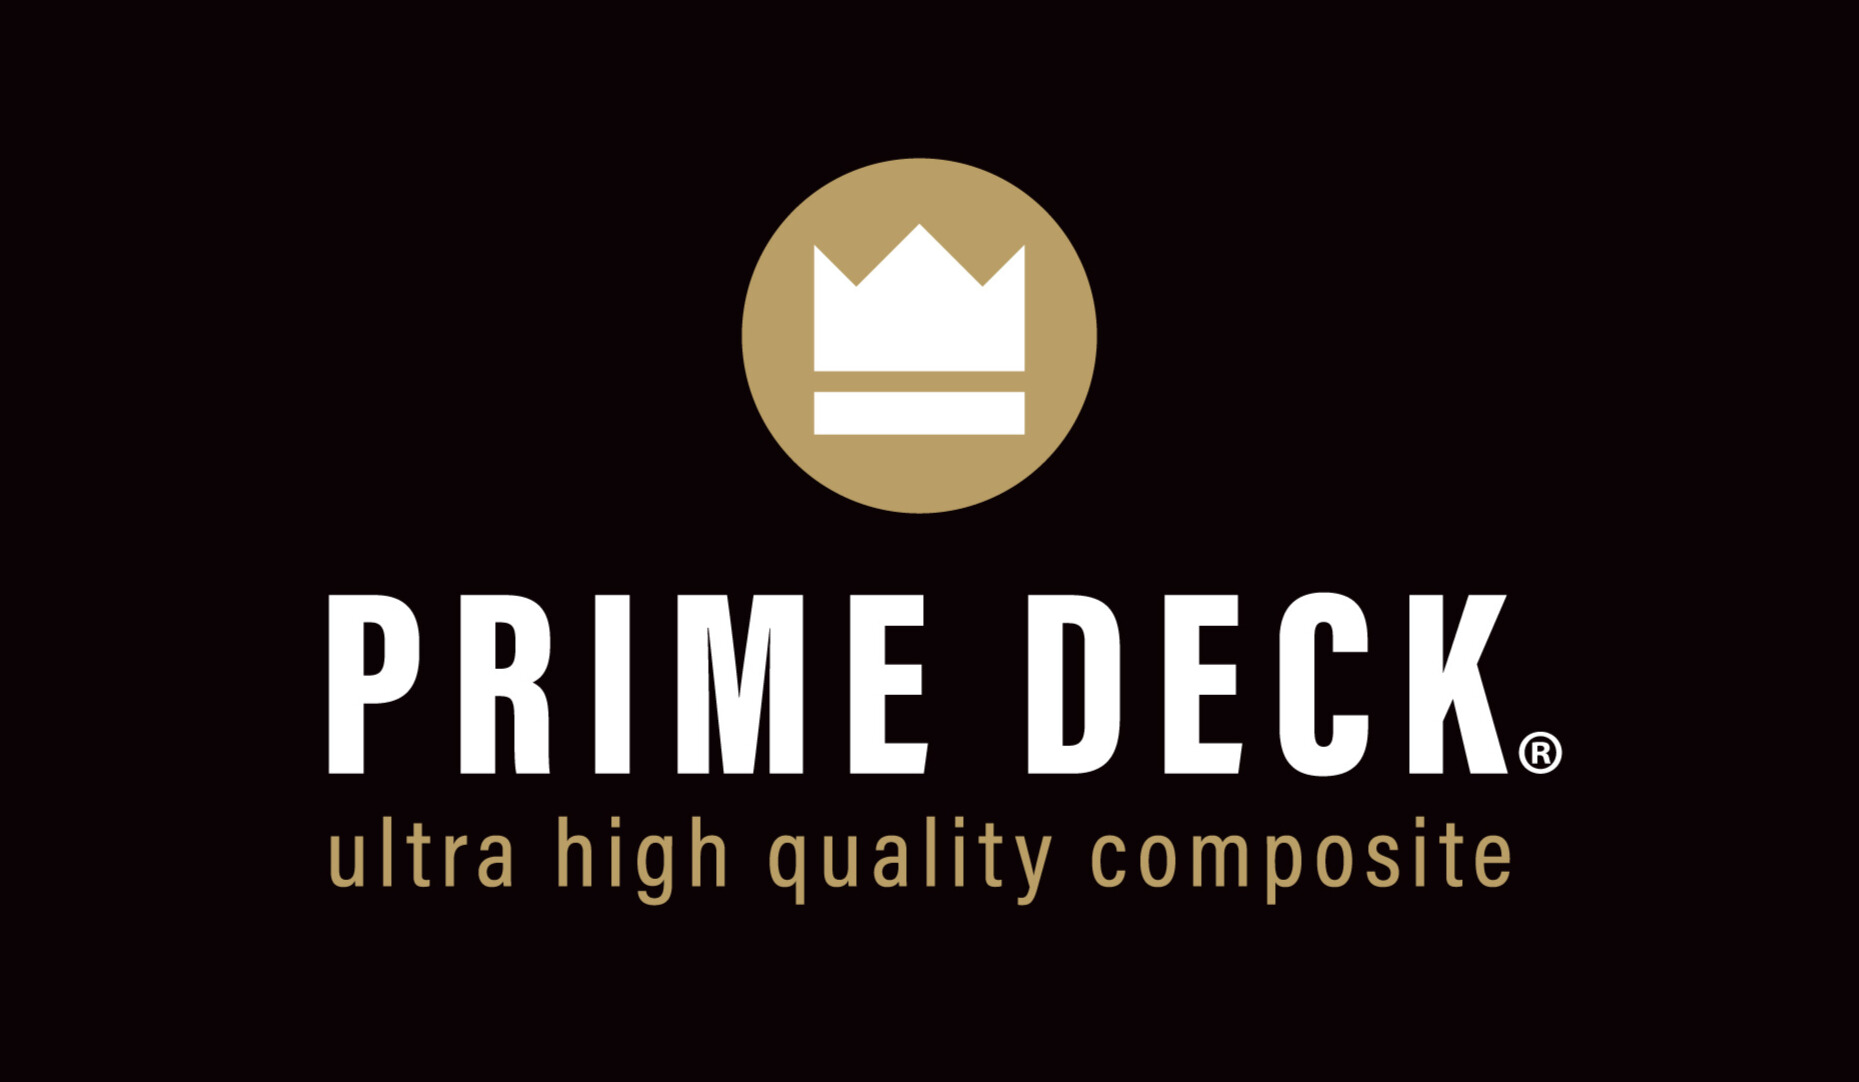 Prime Deck